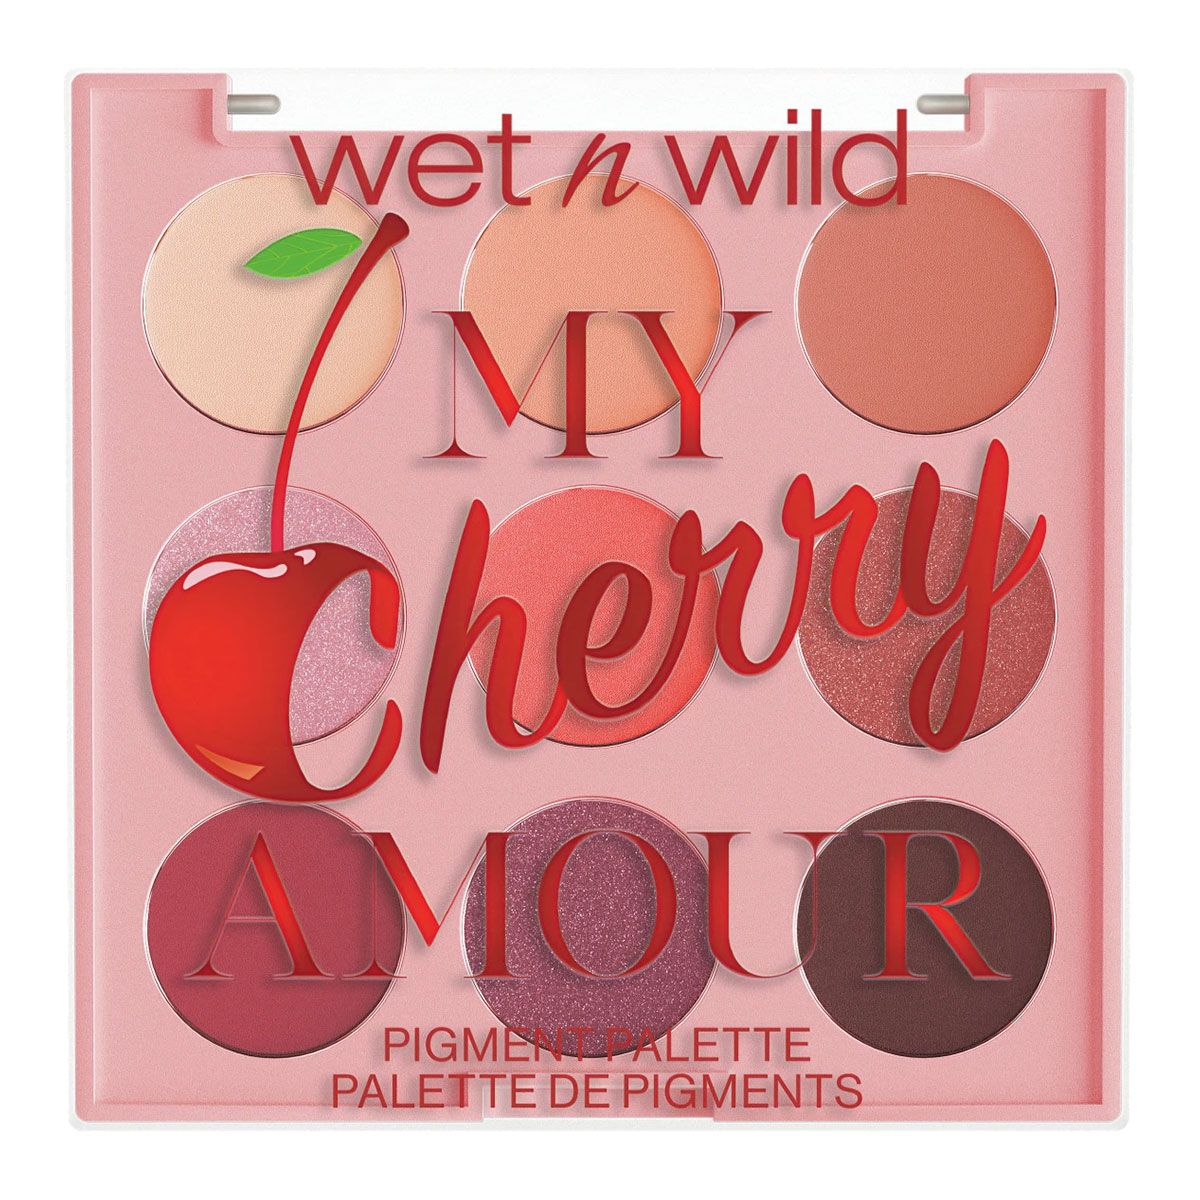 Wet n Wild My Cherry Amour 9 Pan Shadow Palette